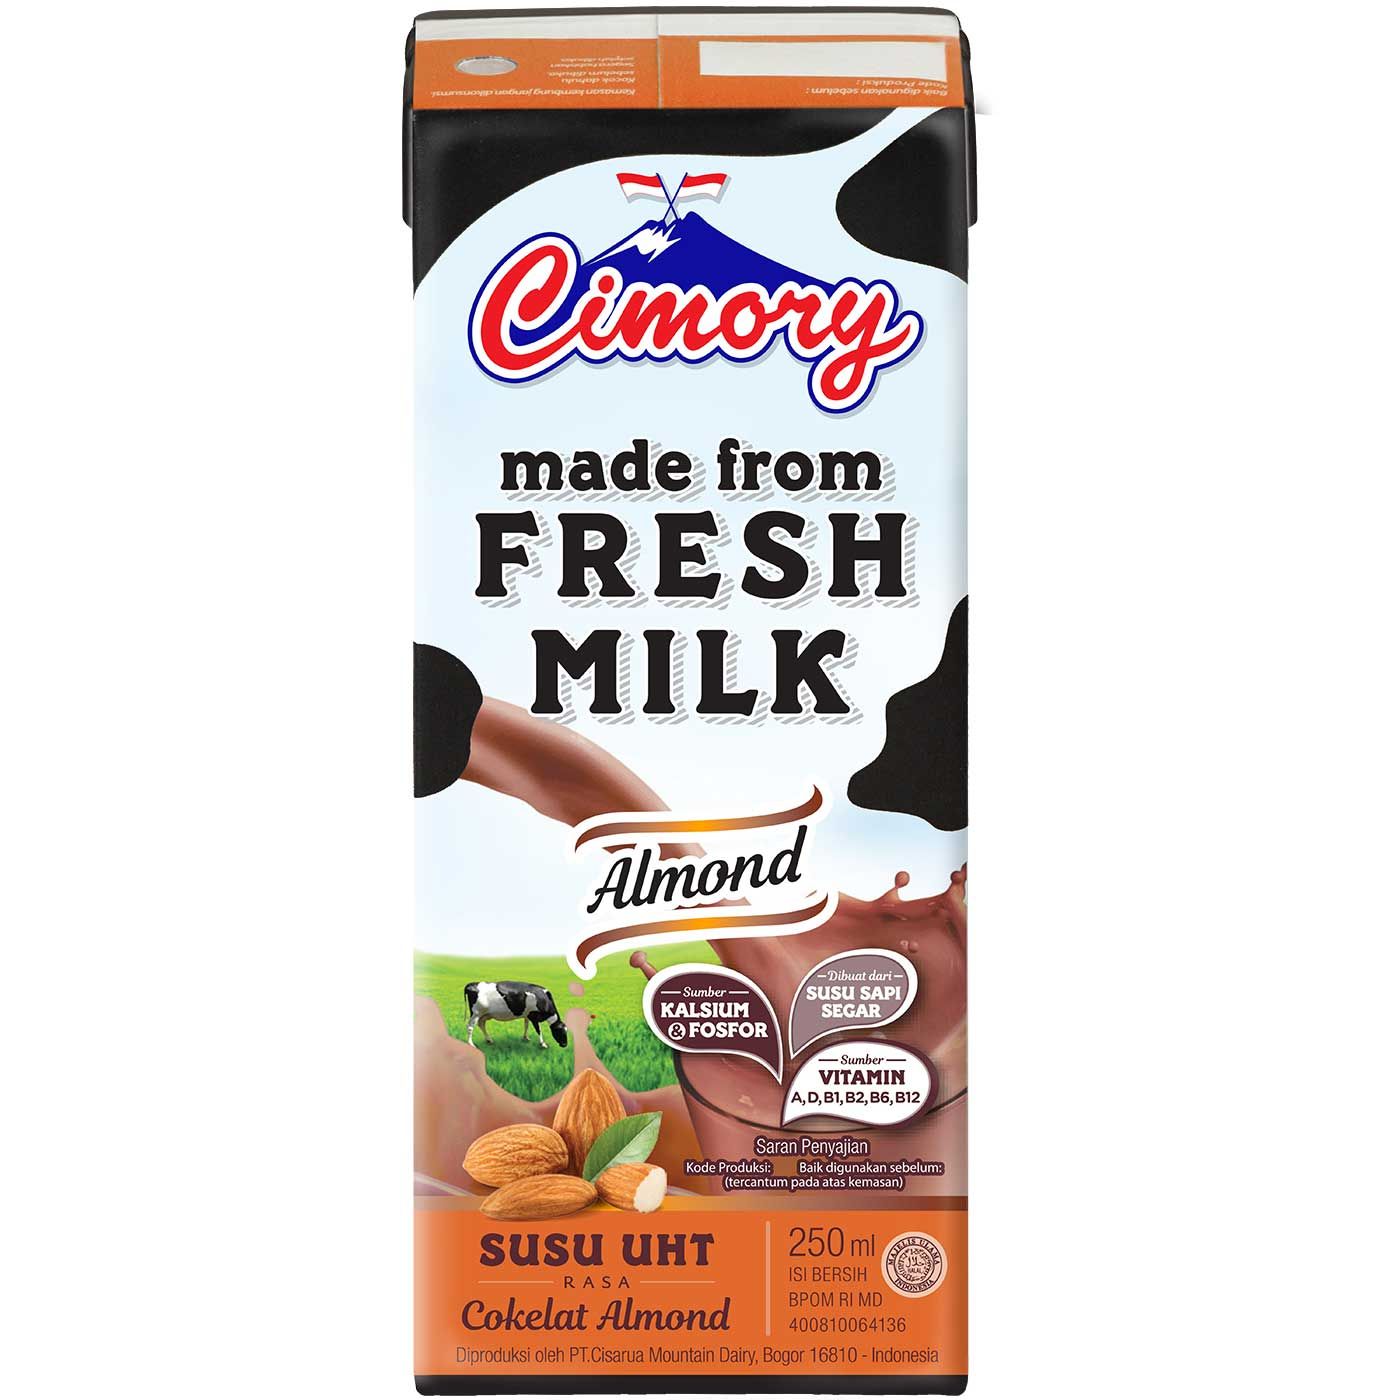 Cimory Uht Milk Almond